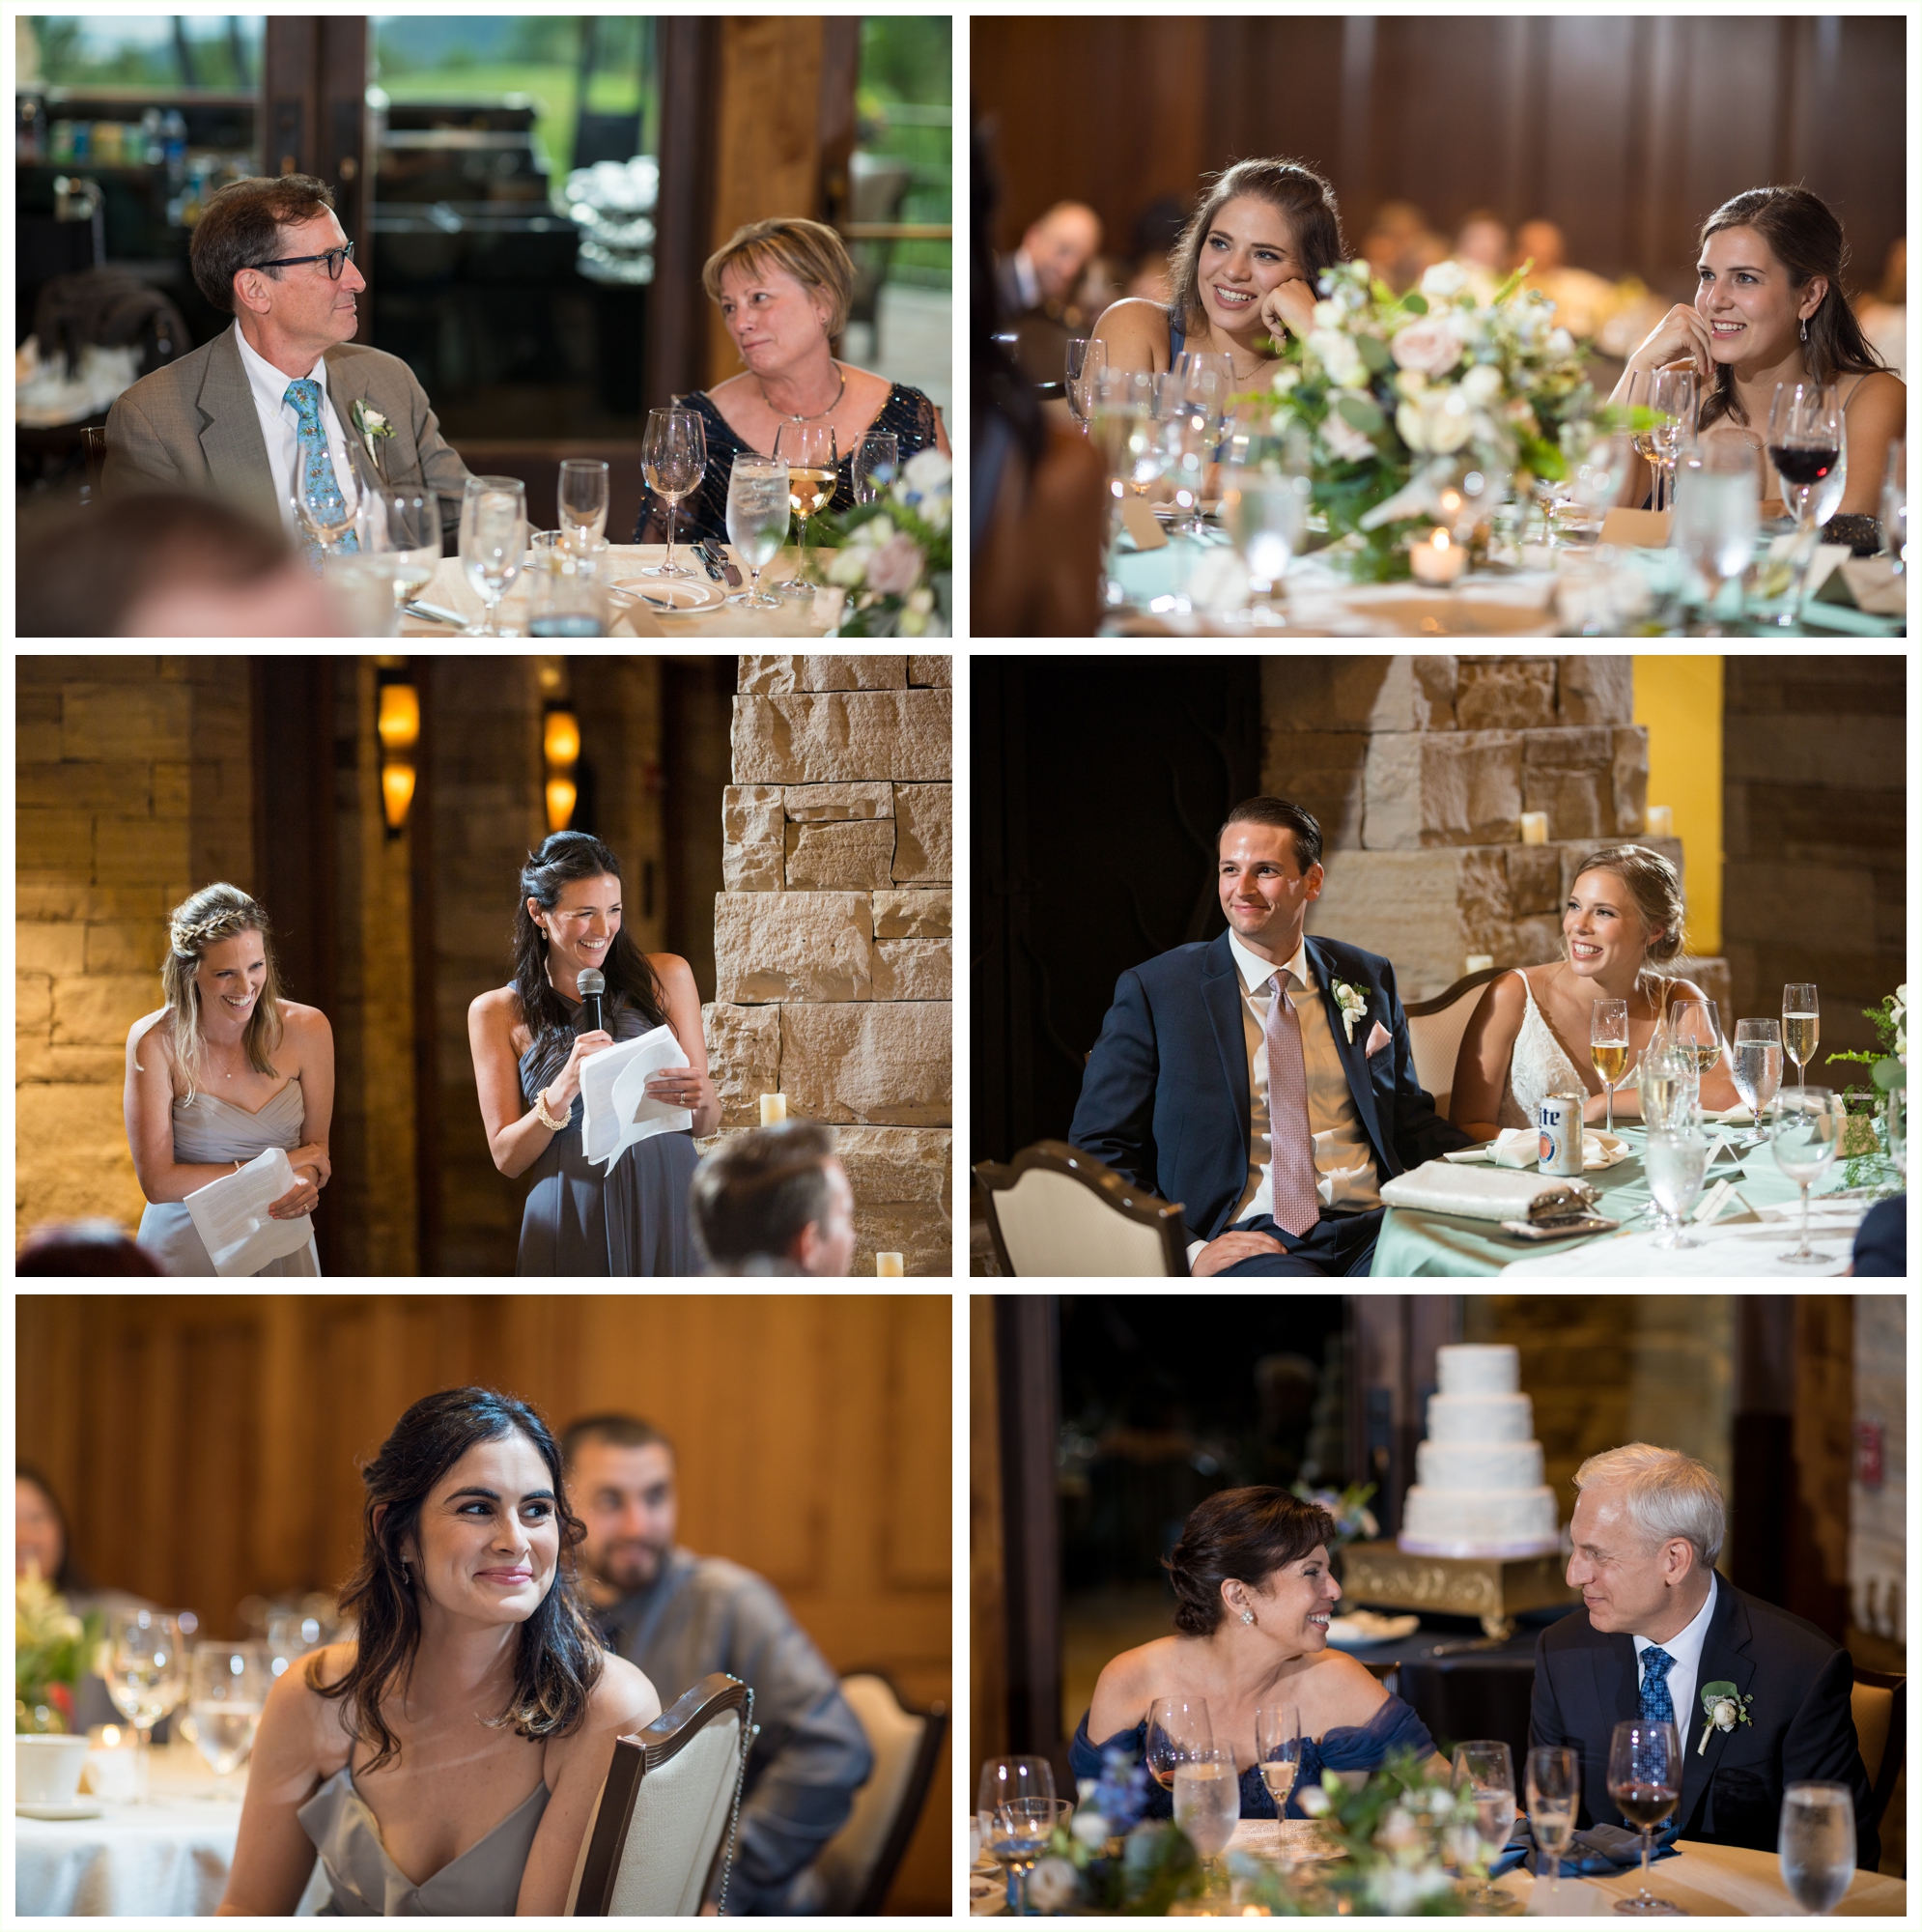 candid photos during toasts at wedding reception in colorado 